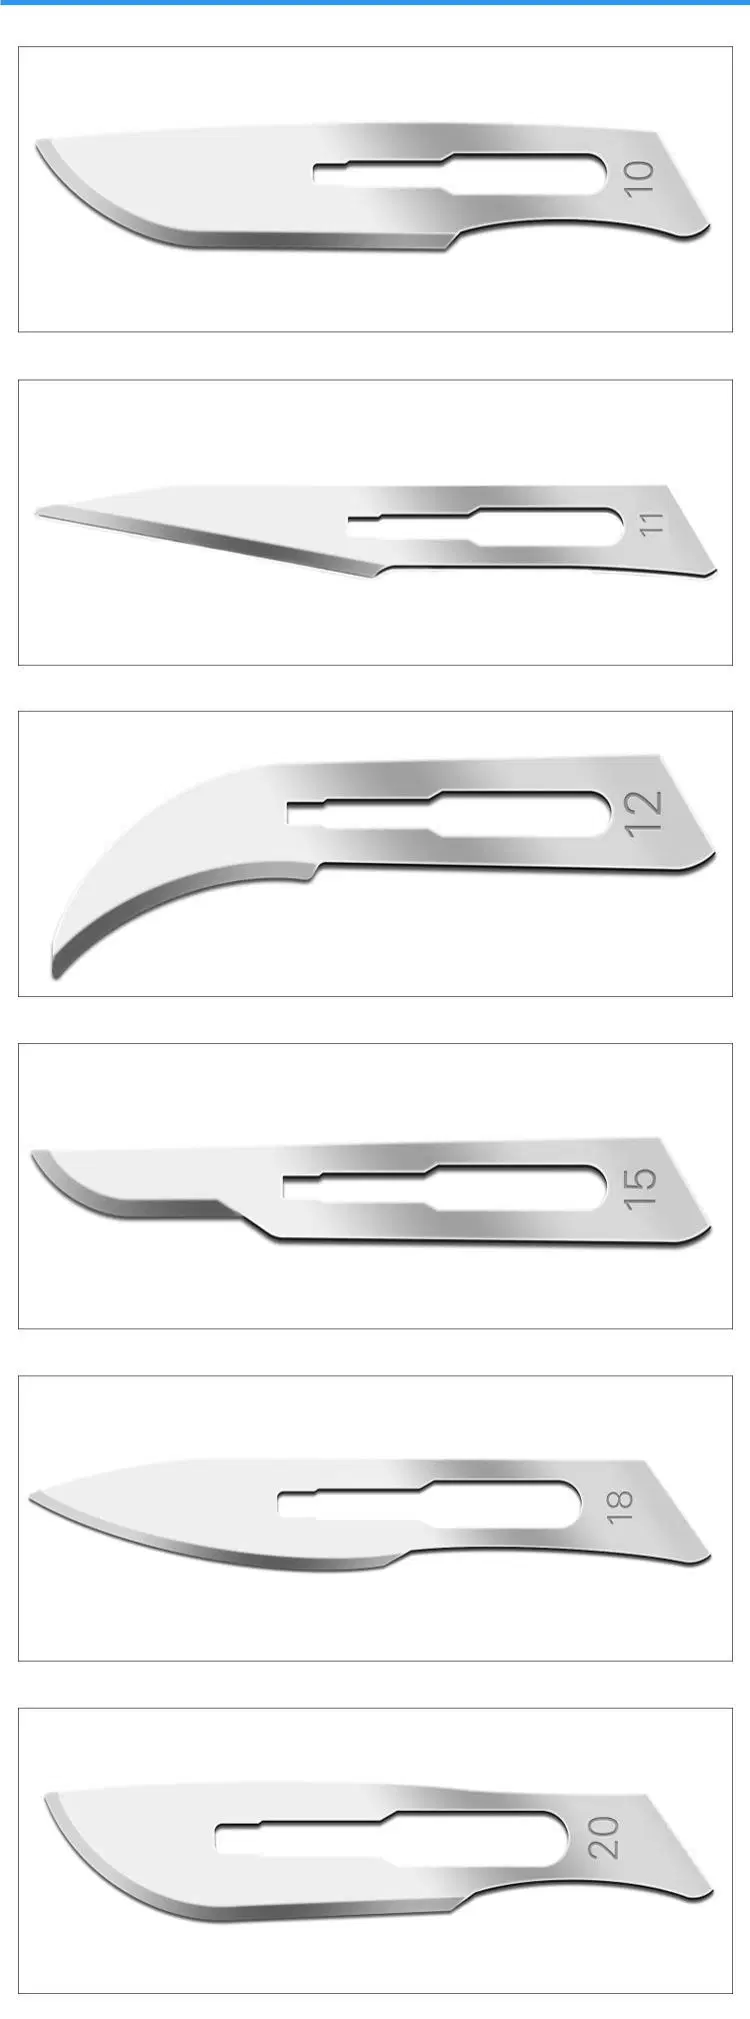 High Quality Surgical Razor Blade for Hospital Use